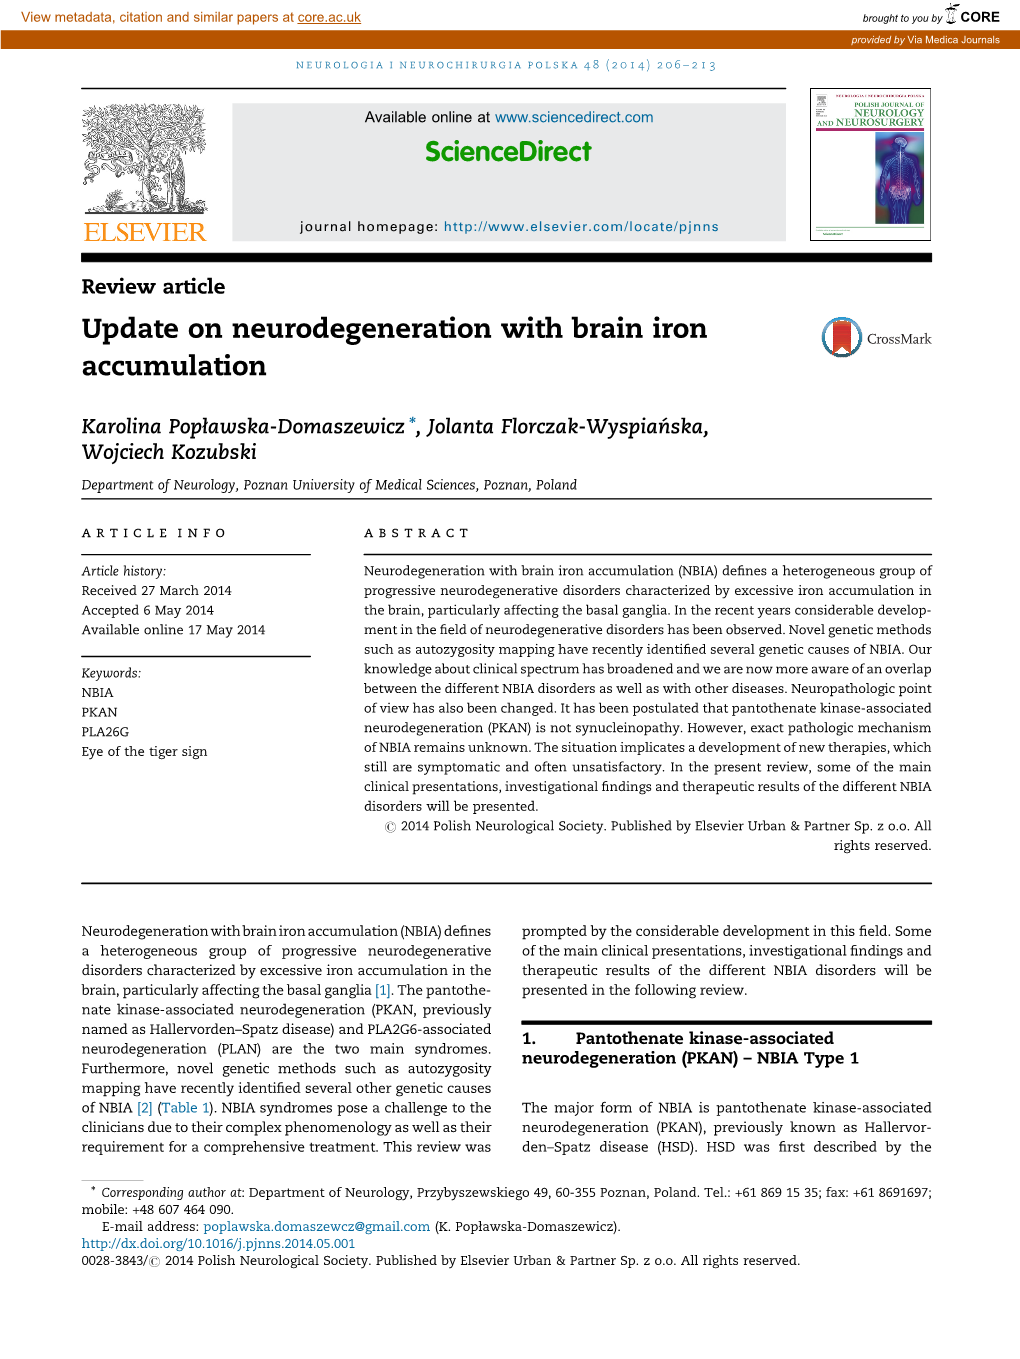 Update on Neurodegeneration with Brain Iron Accumulation